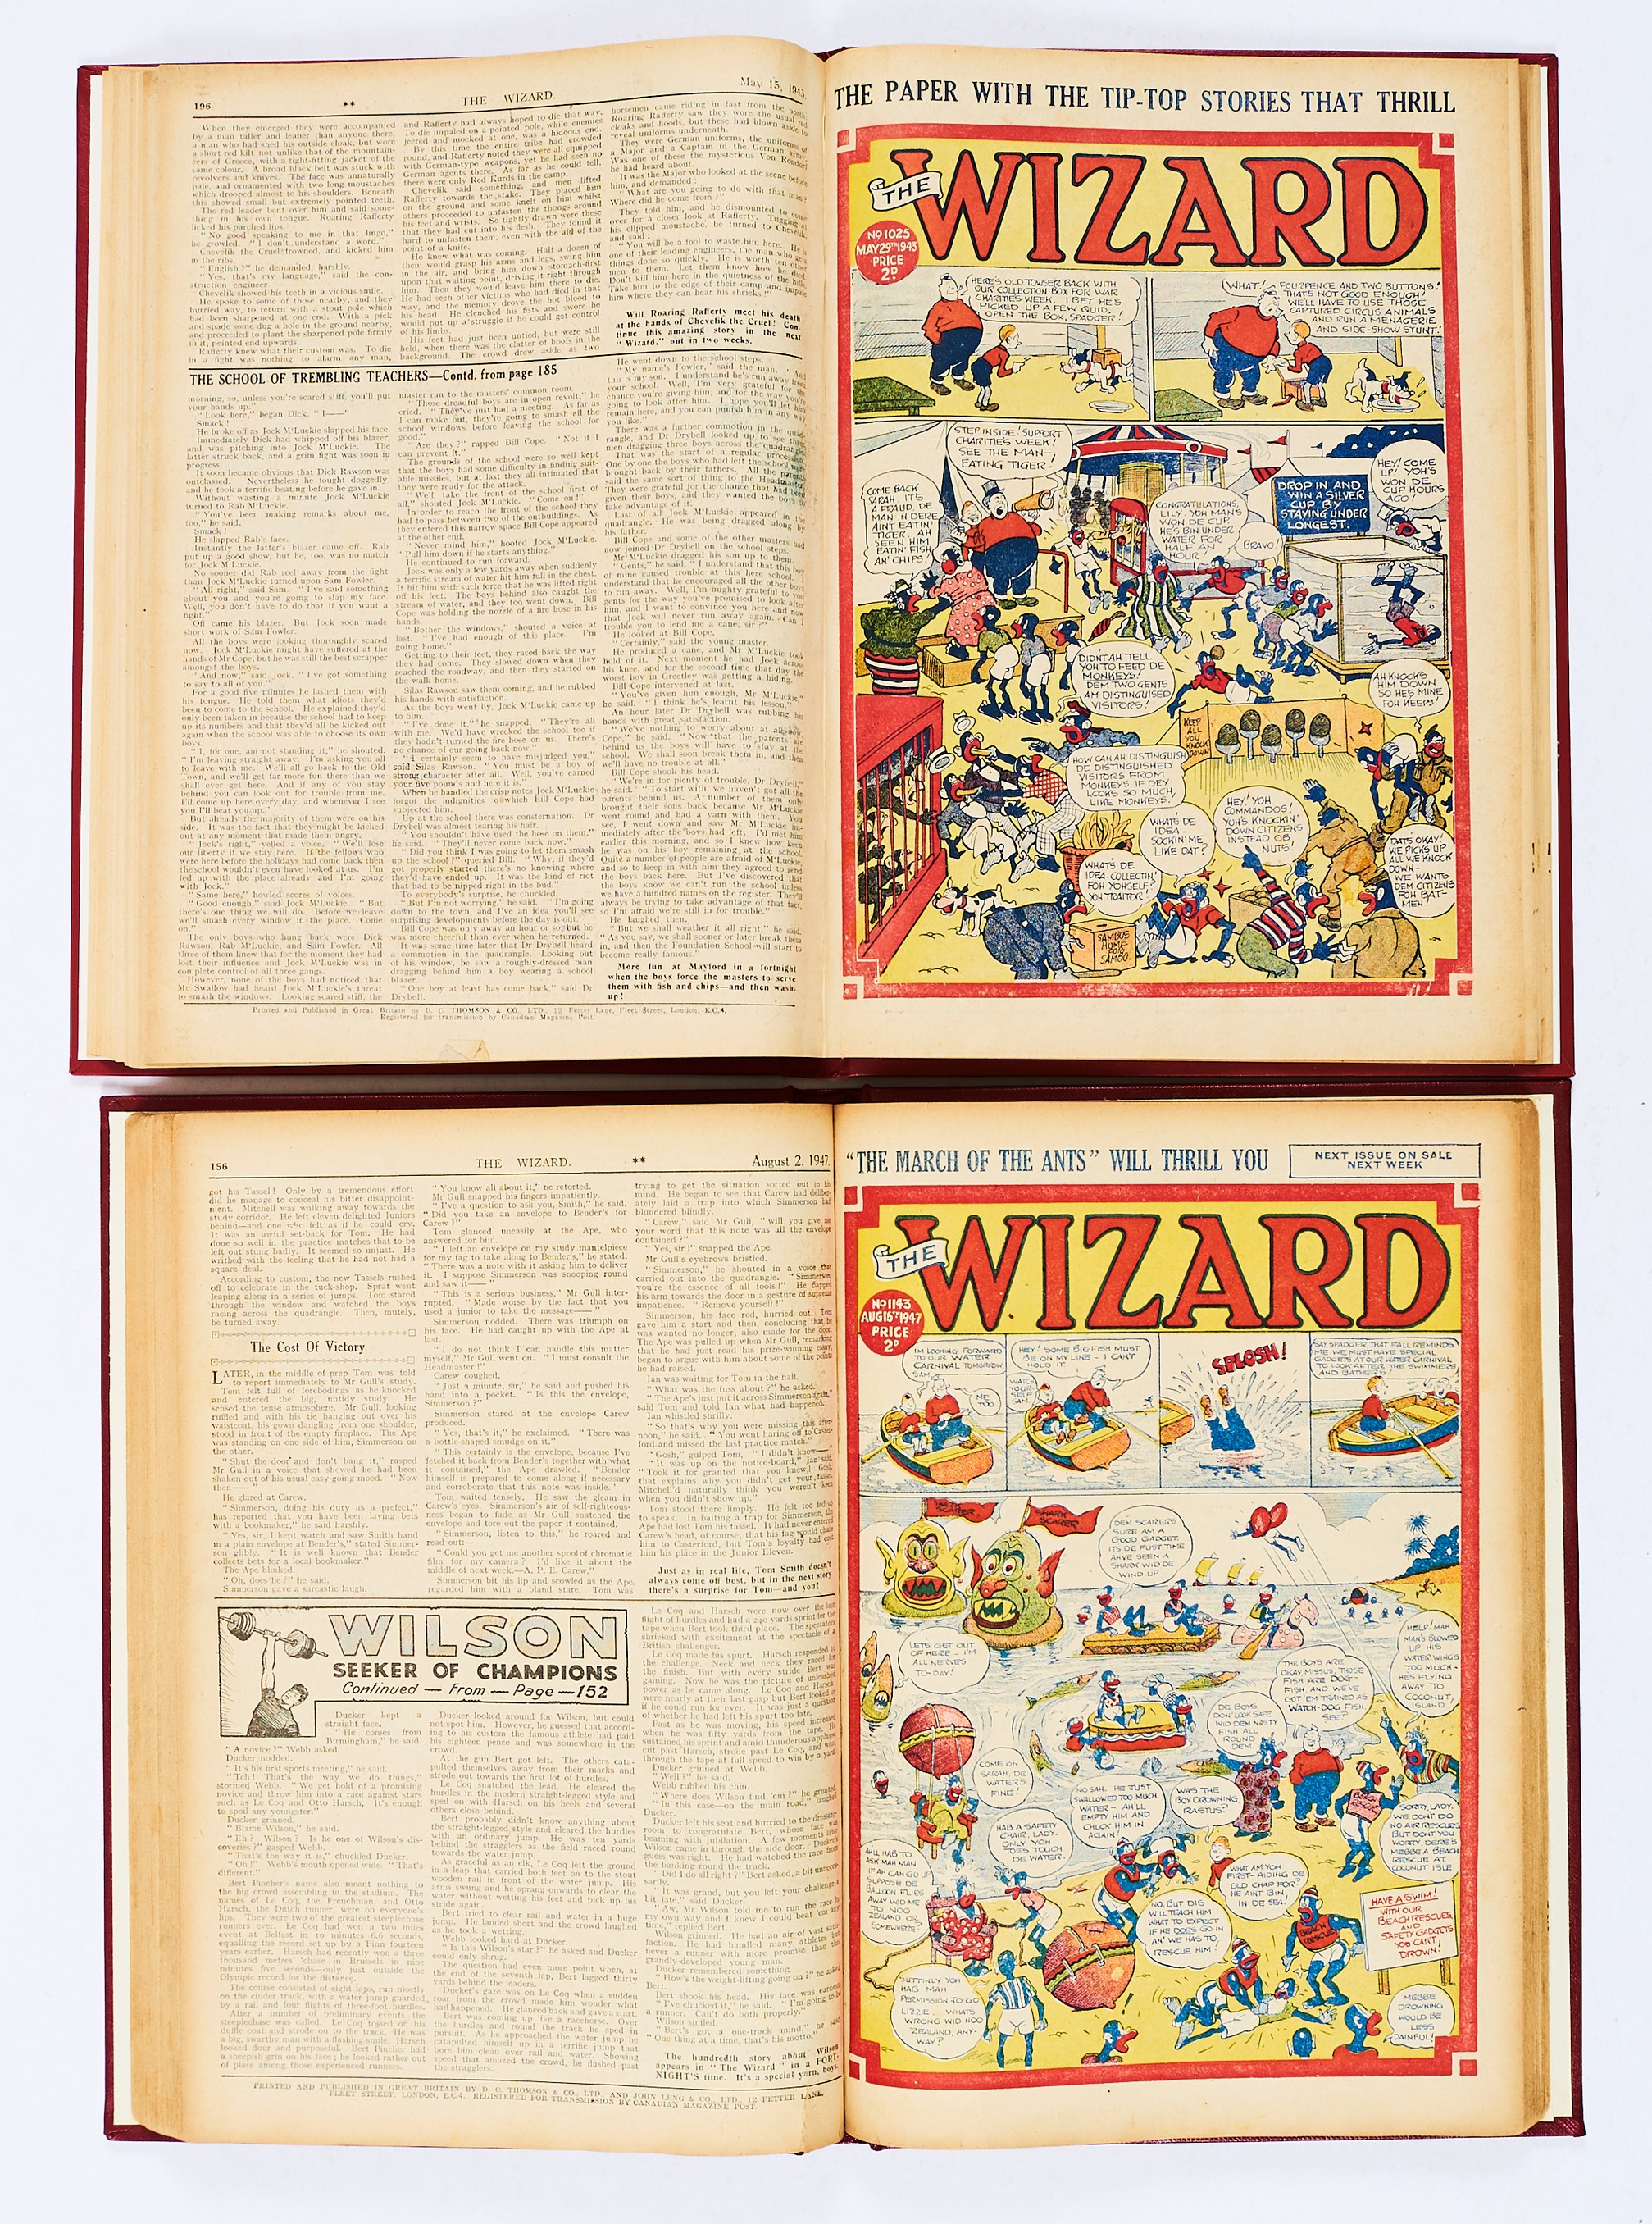 Wizard (Jan-Jun 1943) 1015-1027. Half-year of propaganda war issues. With Wizard (Mar-Oct 1947)